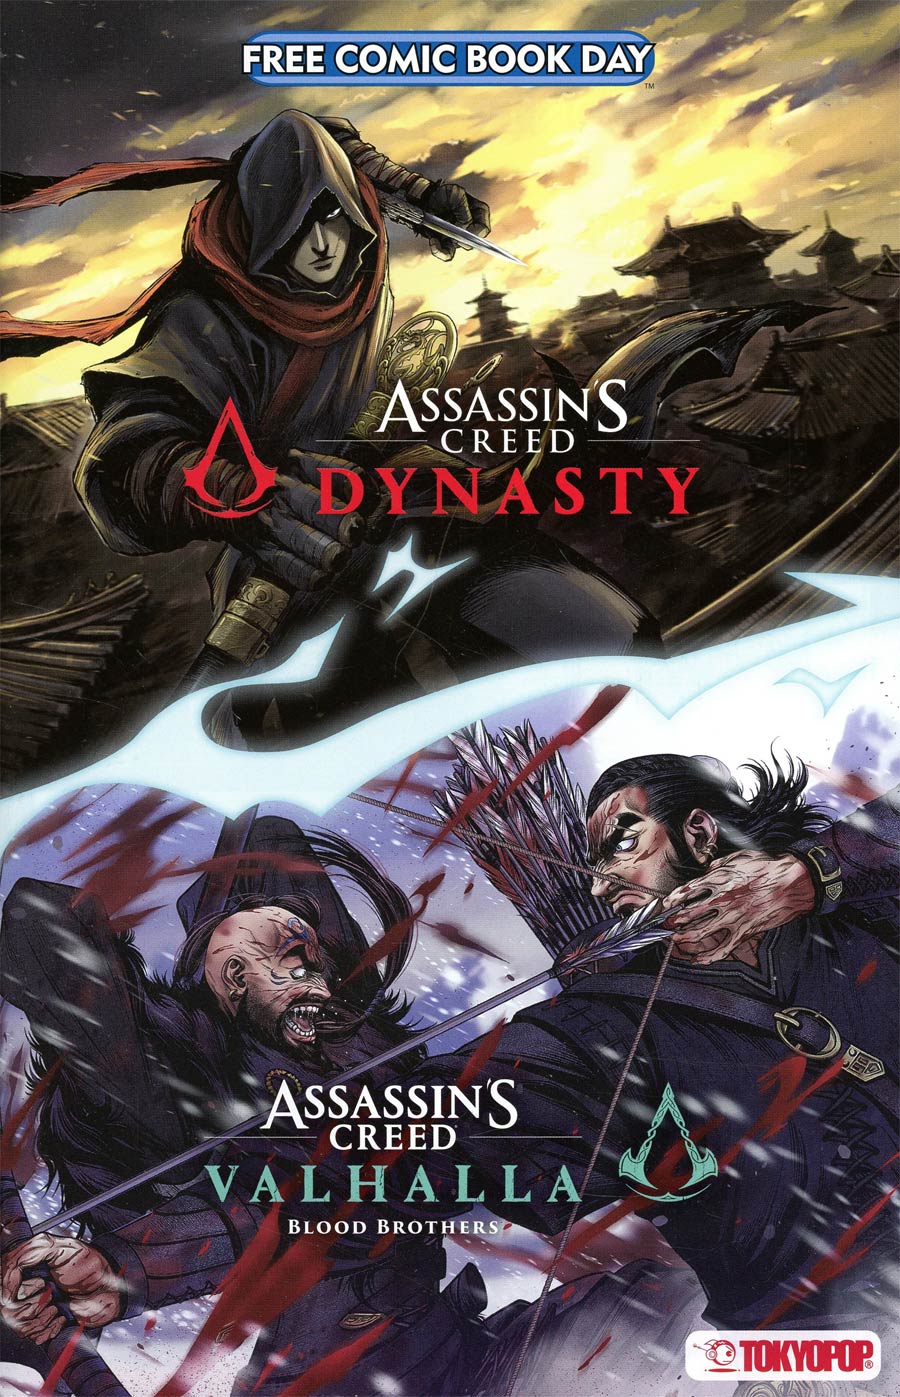 Assassins Creed Valhalla & Dynasty FCBD 2021 Edition